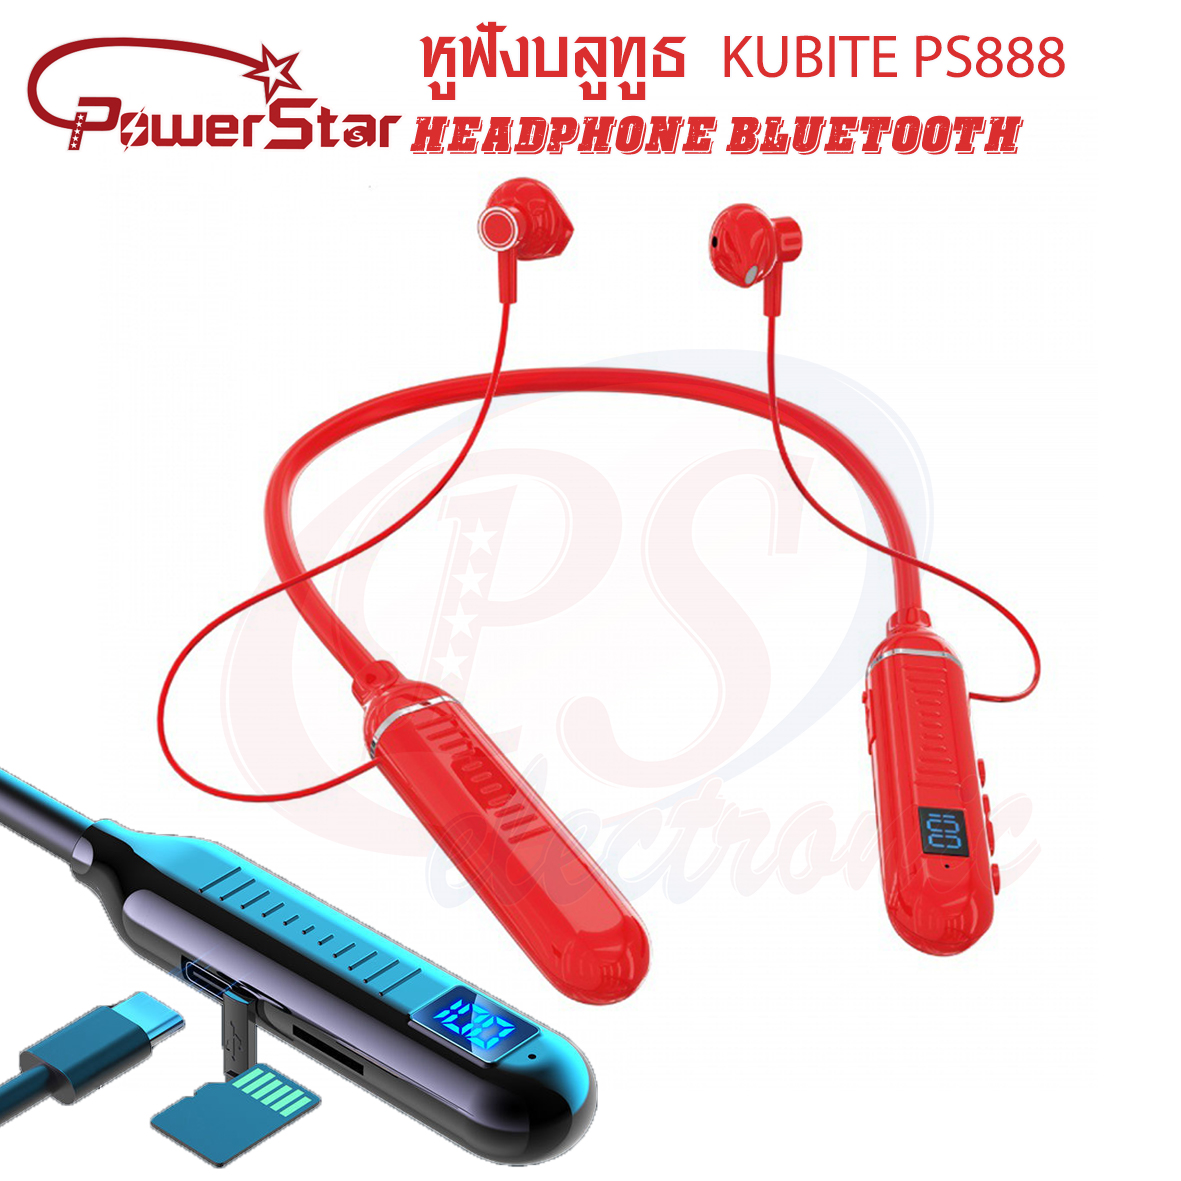 HEADPHONE BLUETOOTH หูฟัง PS888 สีแดง